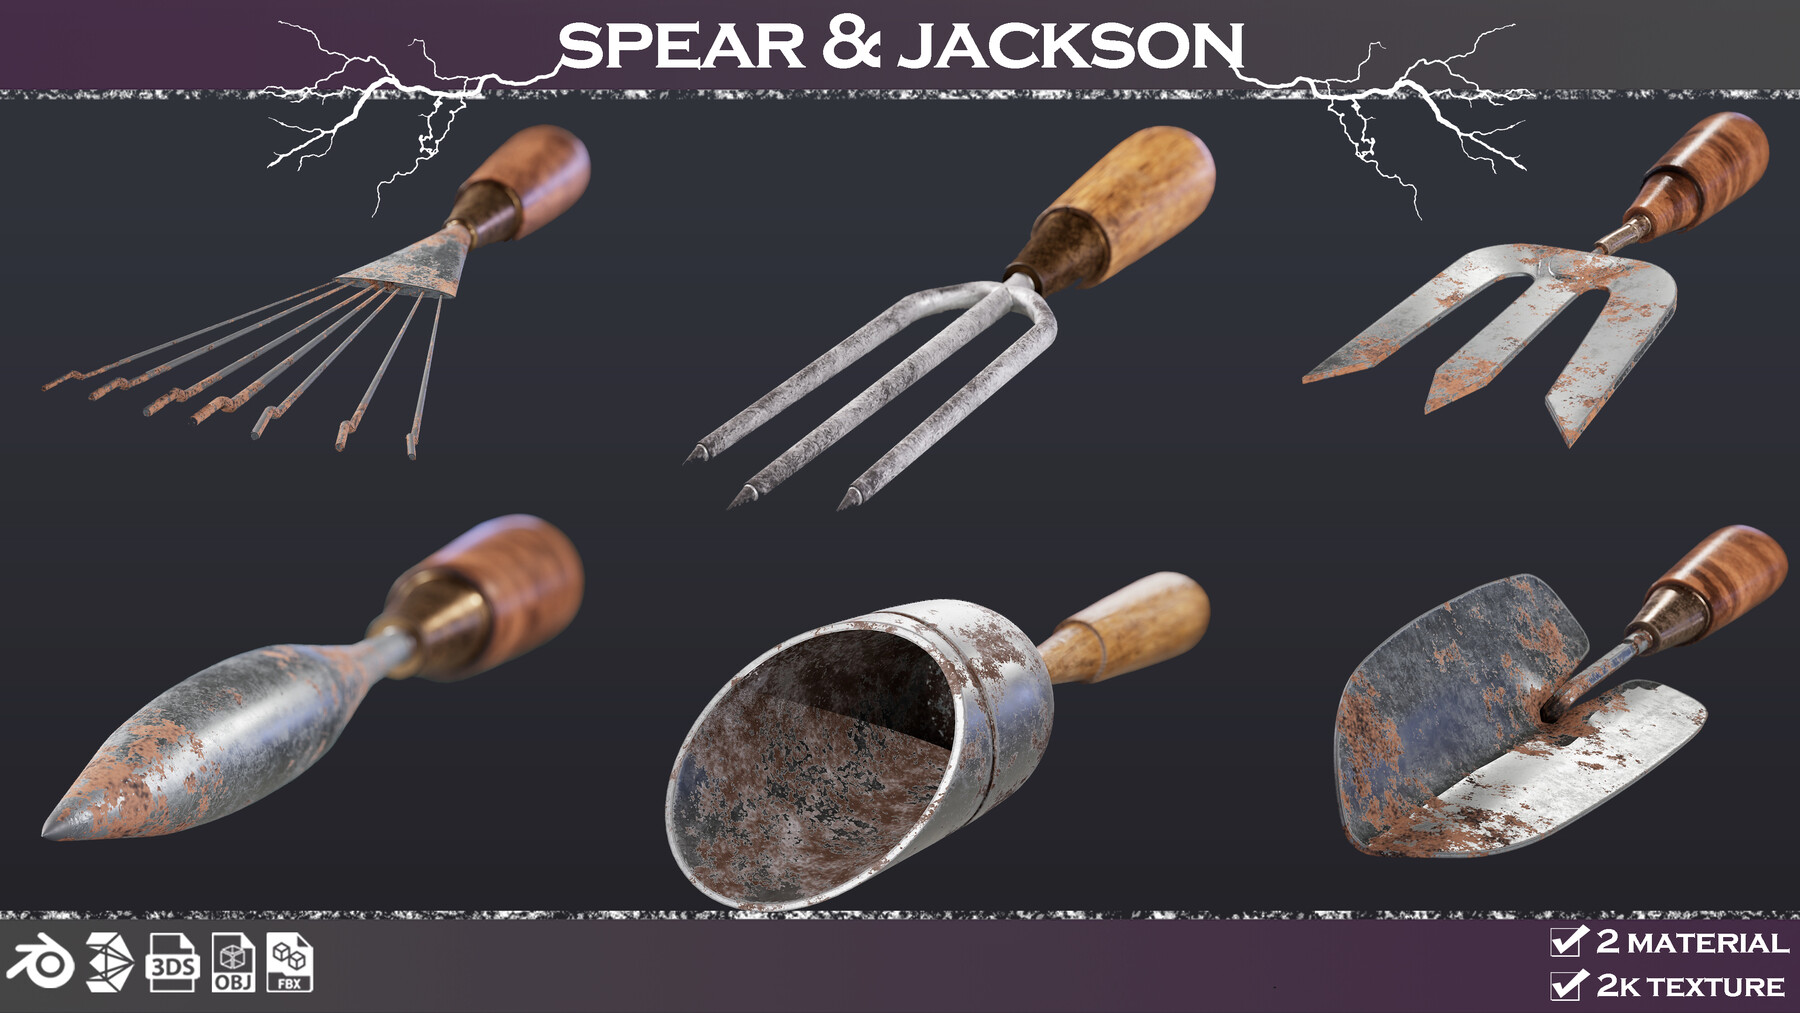 ArtStation - Spear Jackson garden set